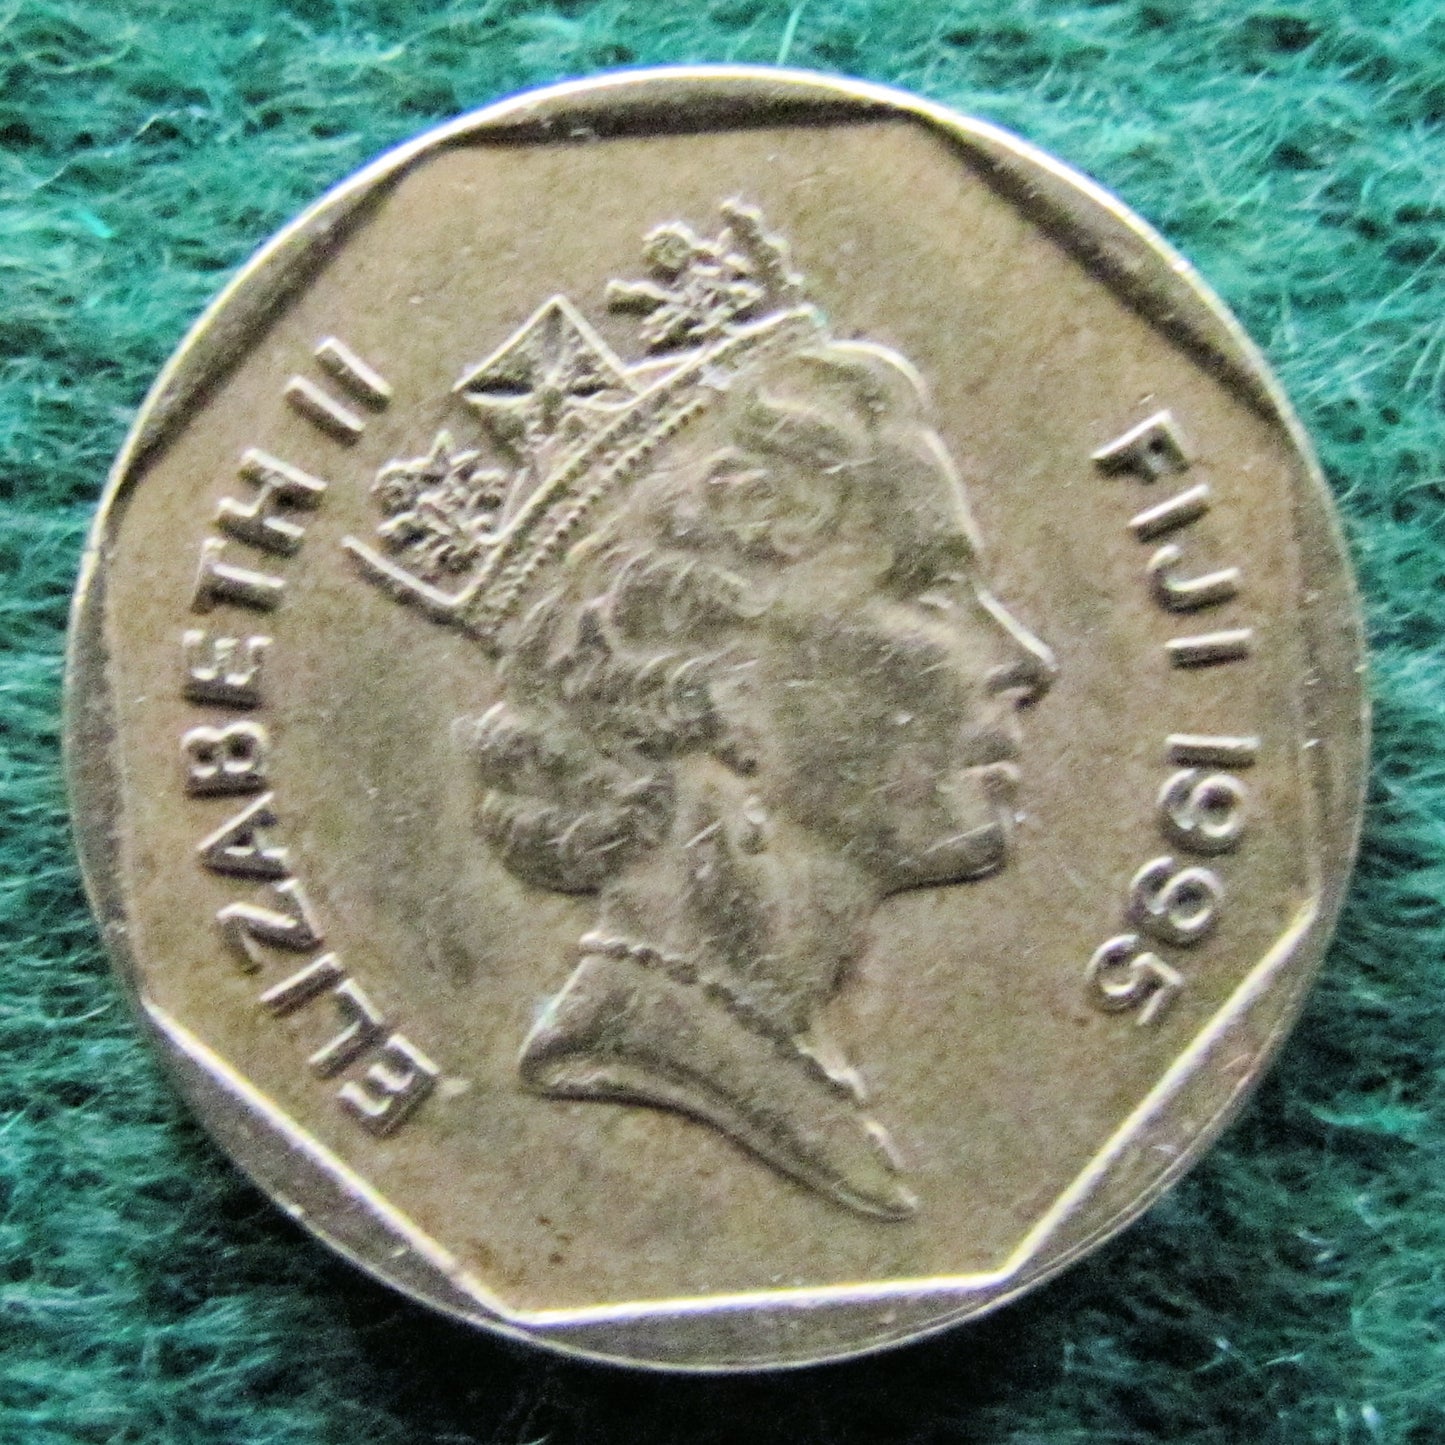 Fiji 1995 1 One Dollar Queen Elizabeth Coin - Circulated